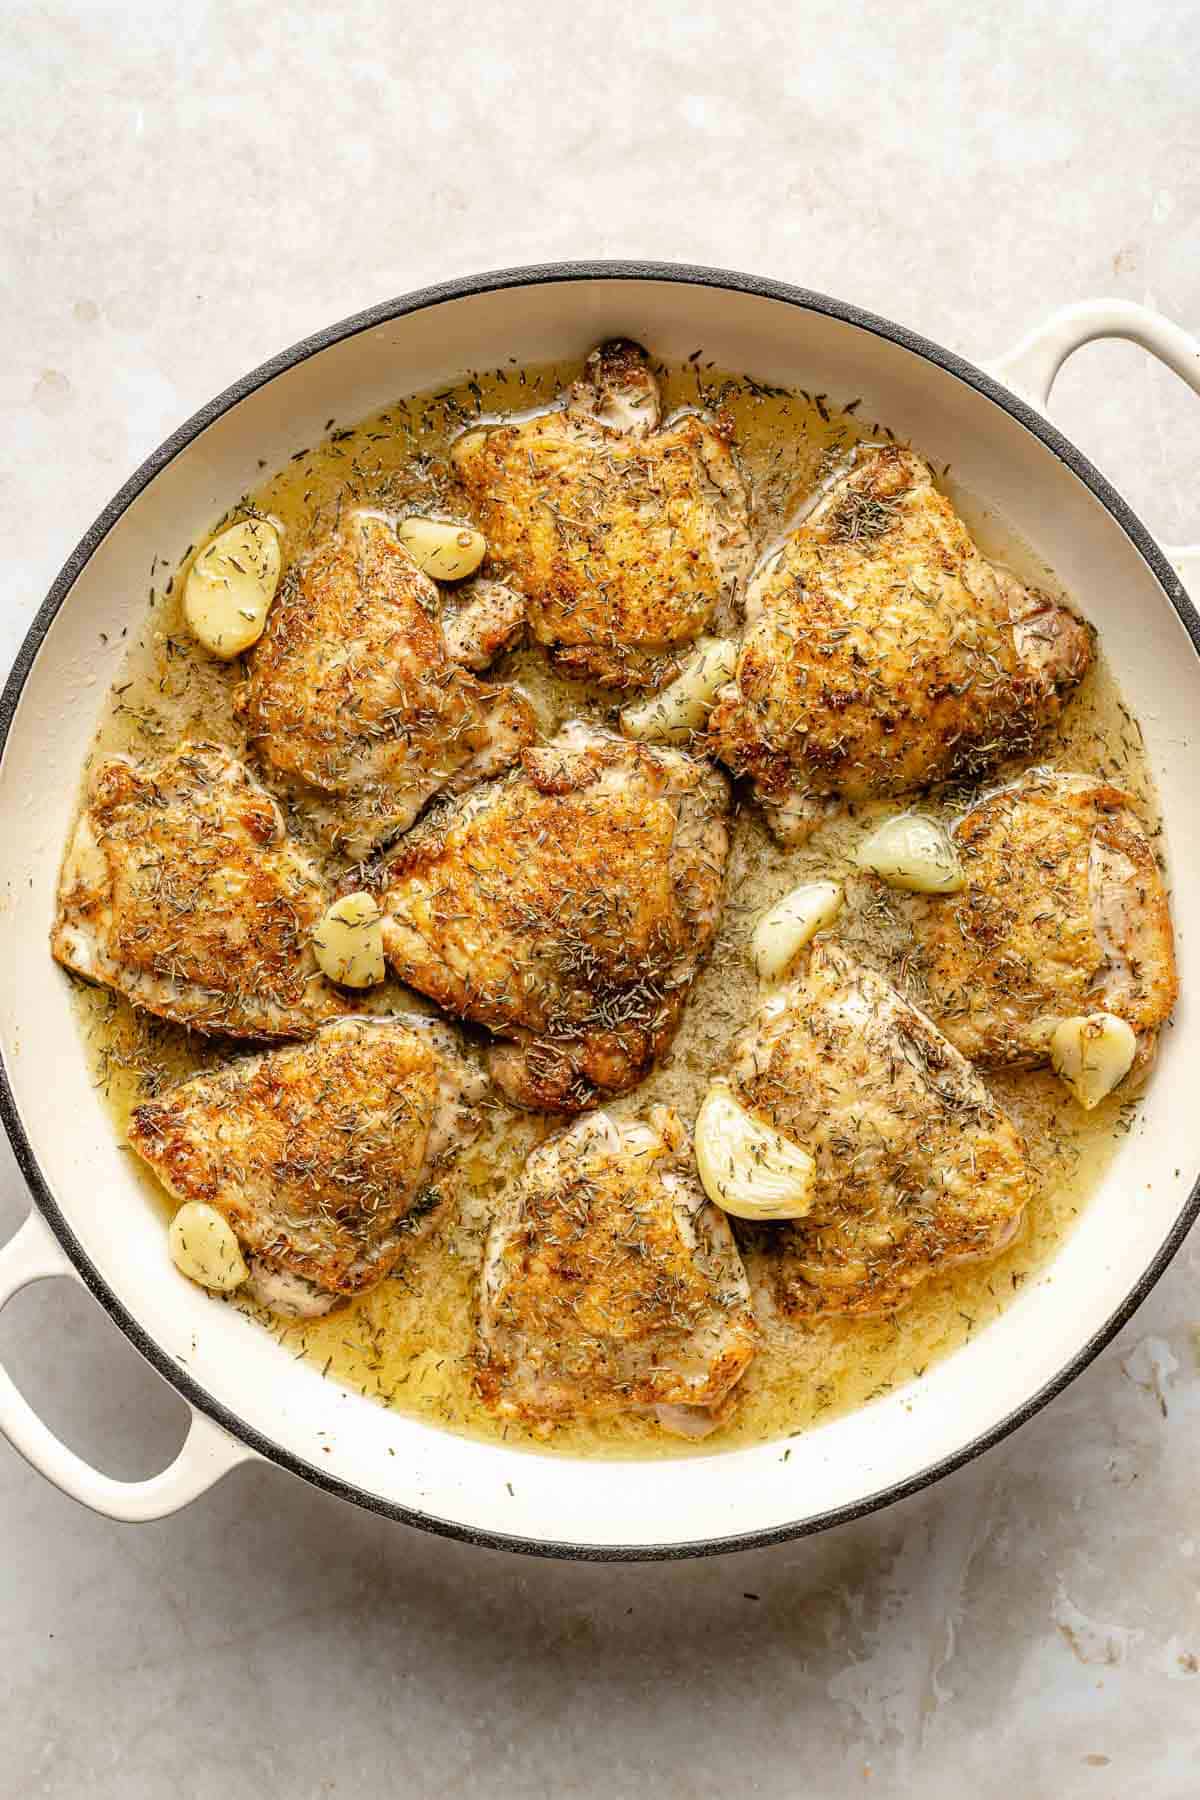 Seared chicken thighs simmer in a white wine-garlic sauce.